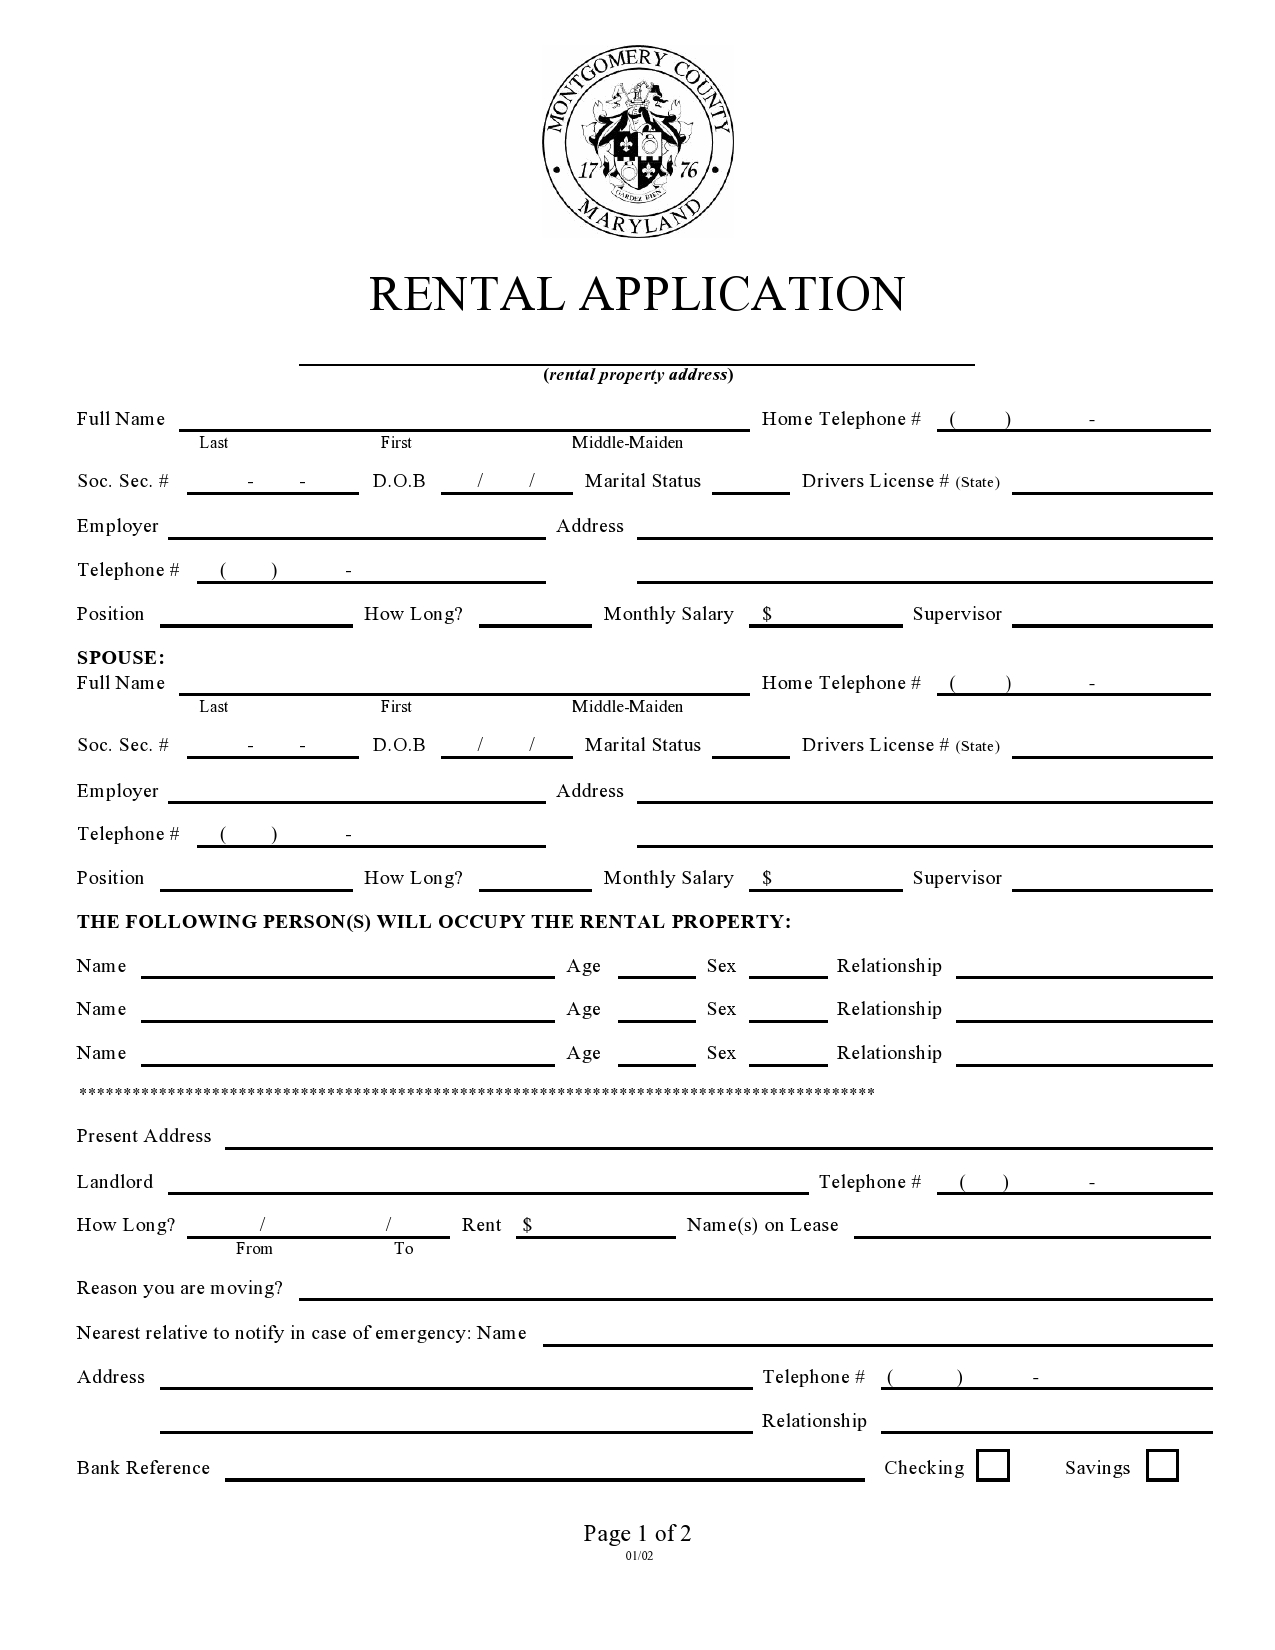 Free rental application form 21